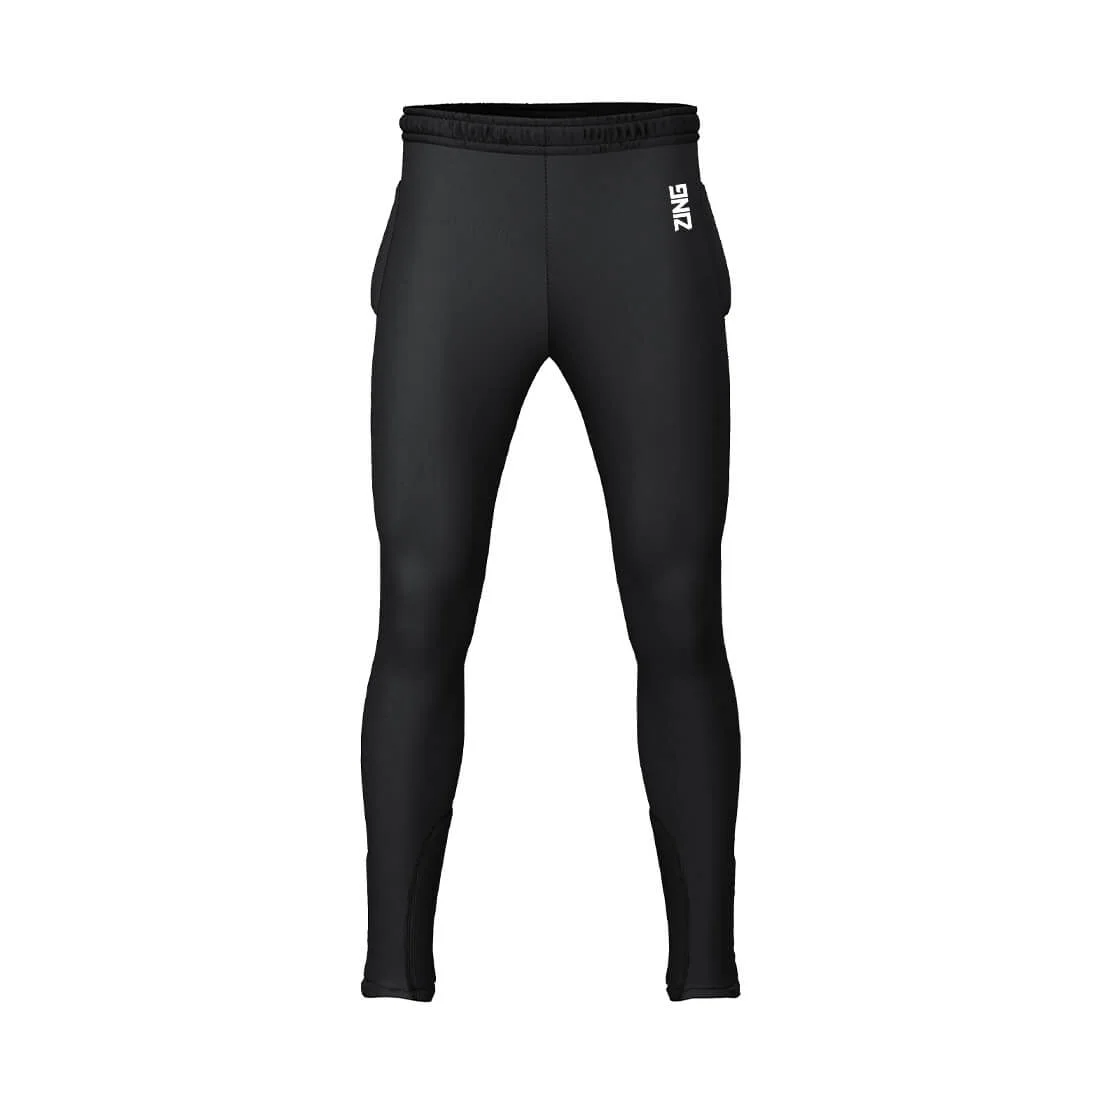 ZING Sportswear Skinny Pants | Training Kit and Teamwear - Front Black